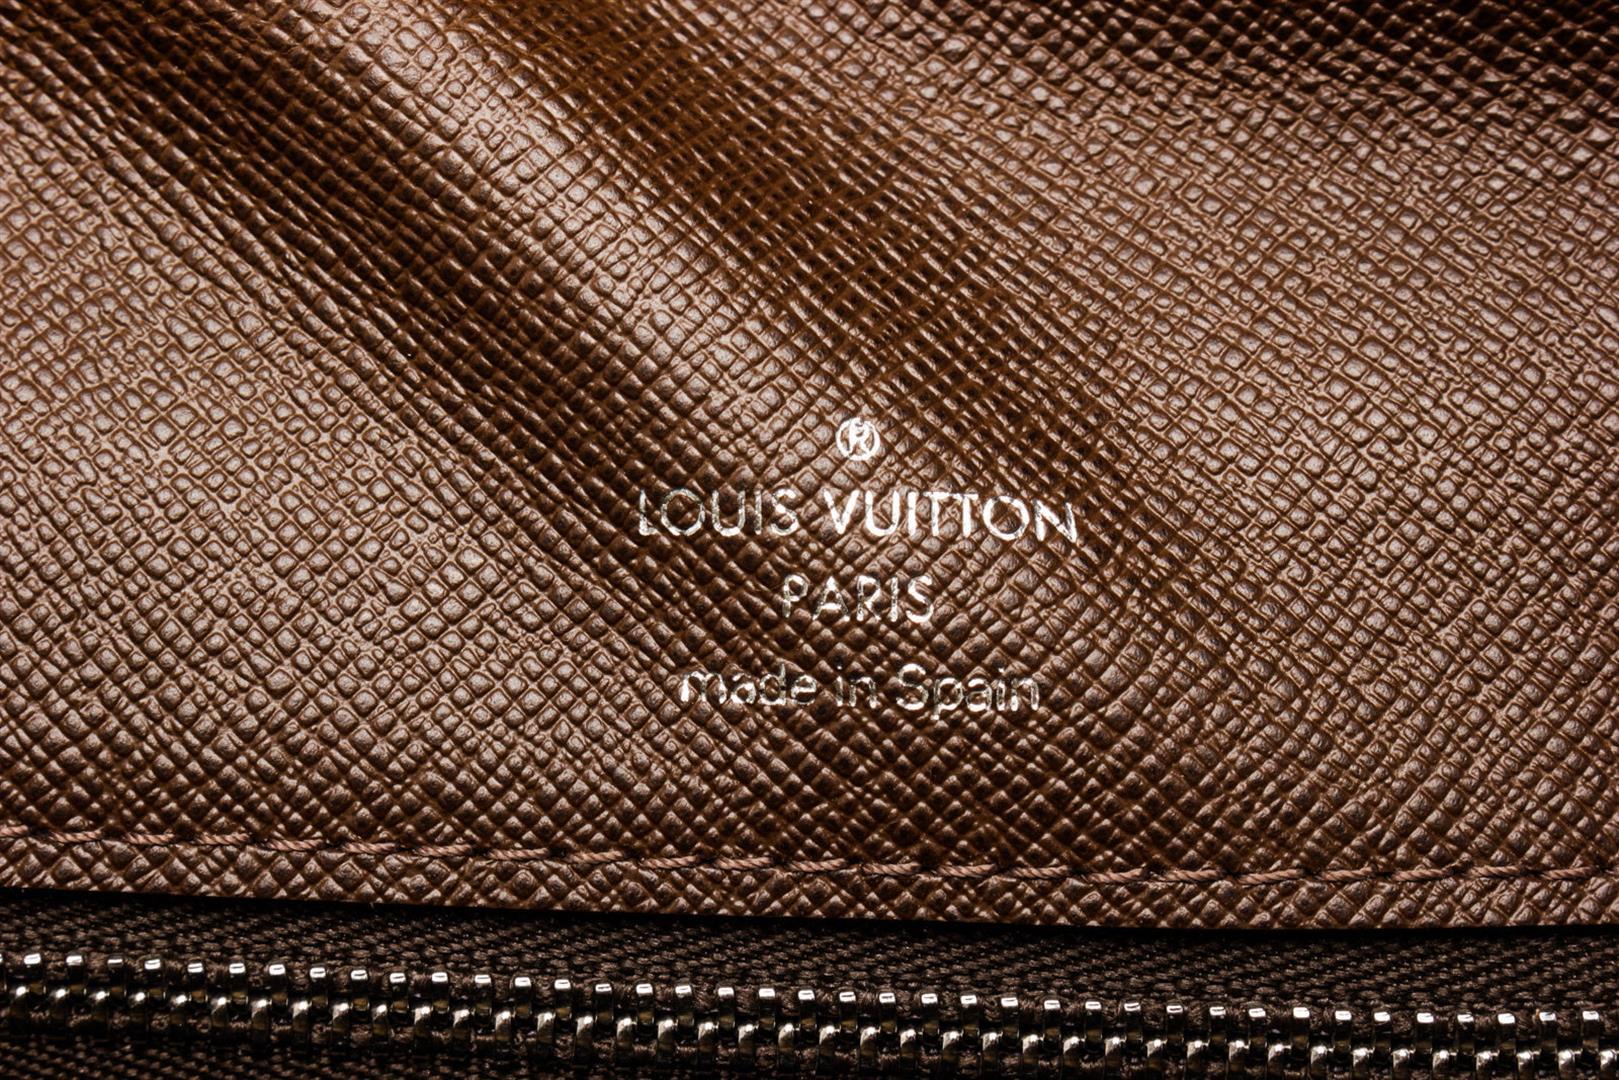 Louis Vuitton Brown Taiga Leather Selenga Pouch Bag